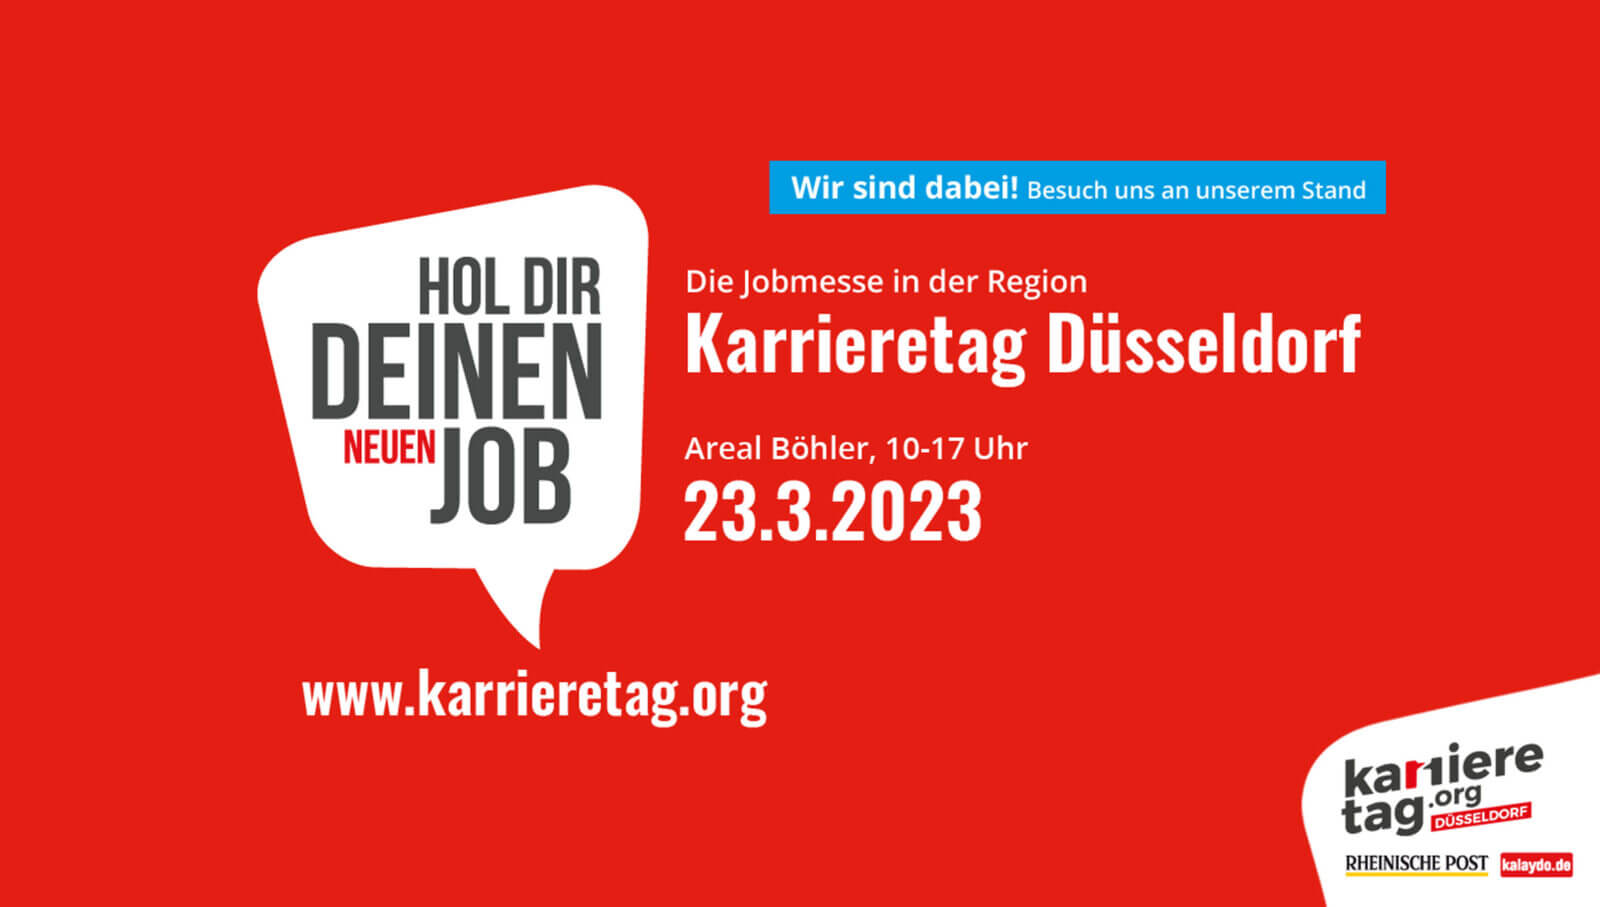 Karrieretag Düsseldorf: Triff uns am 23. März im Areal Böhler!